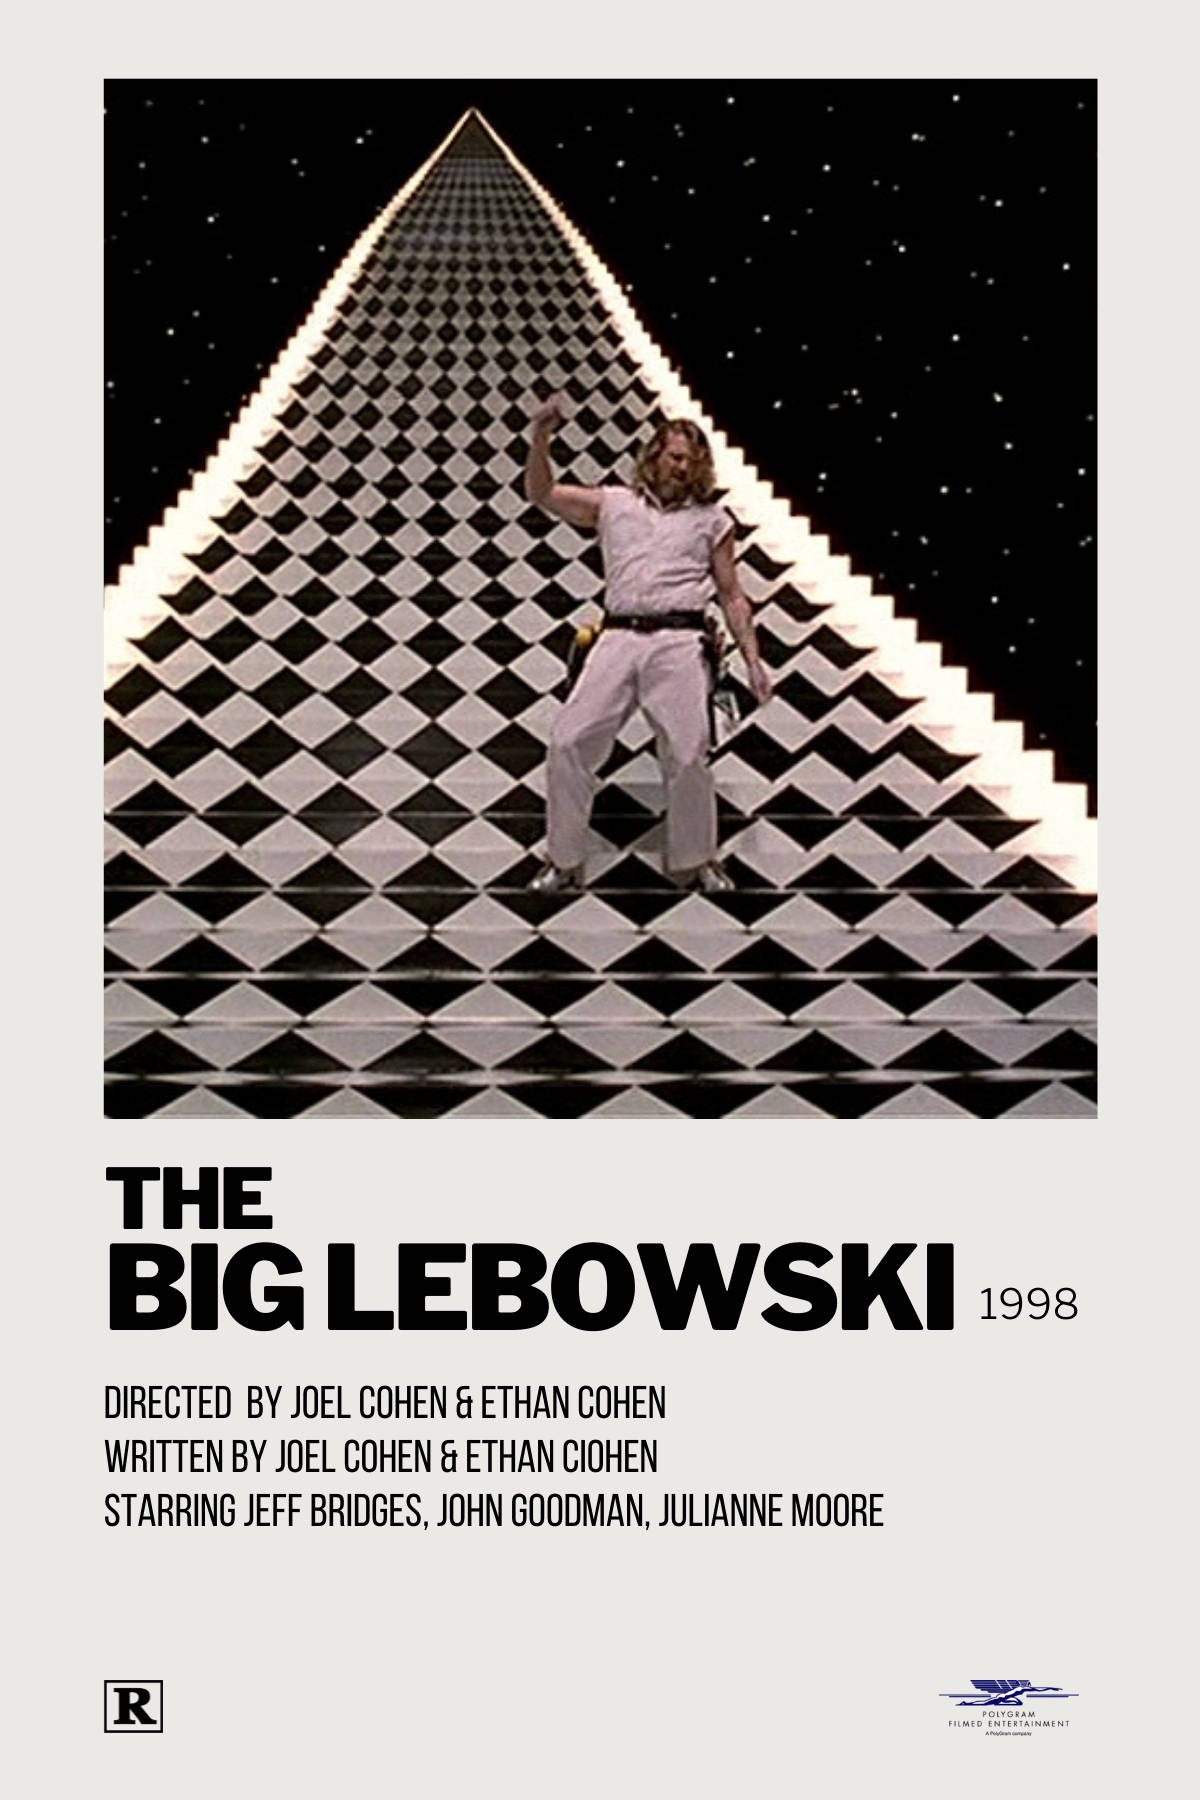 The Big Lebowski 1998 Trippy Poster Art Background